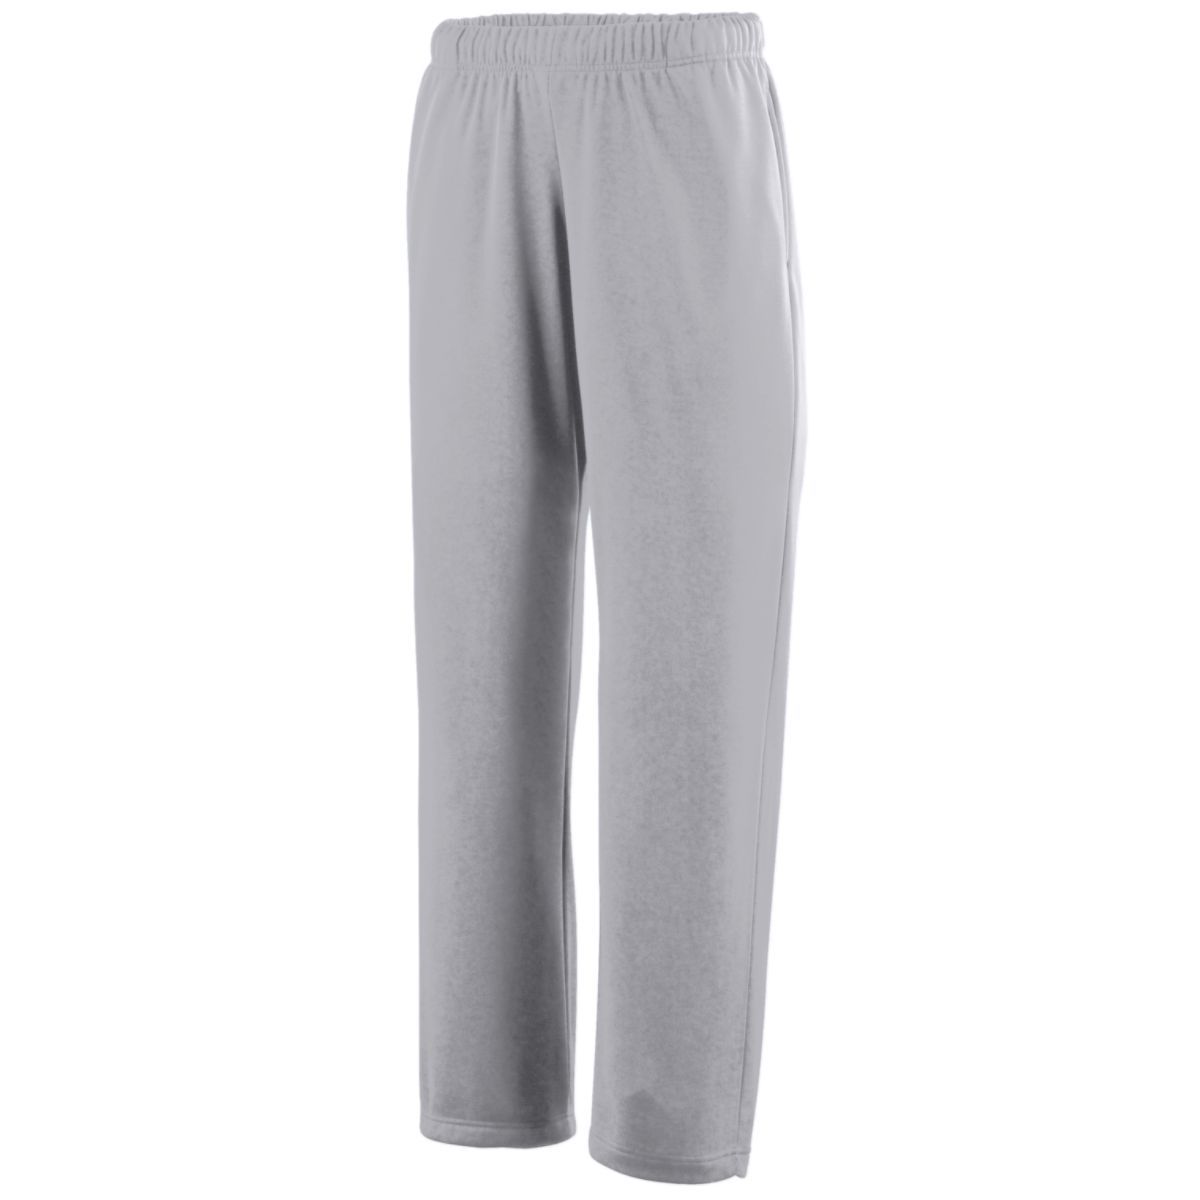 Pantalon molletonné absorbant - 5515